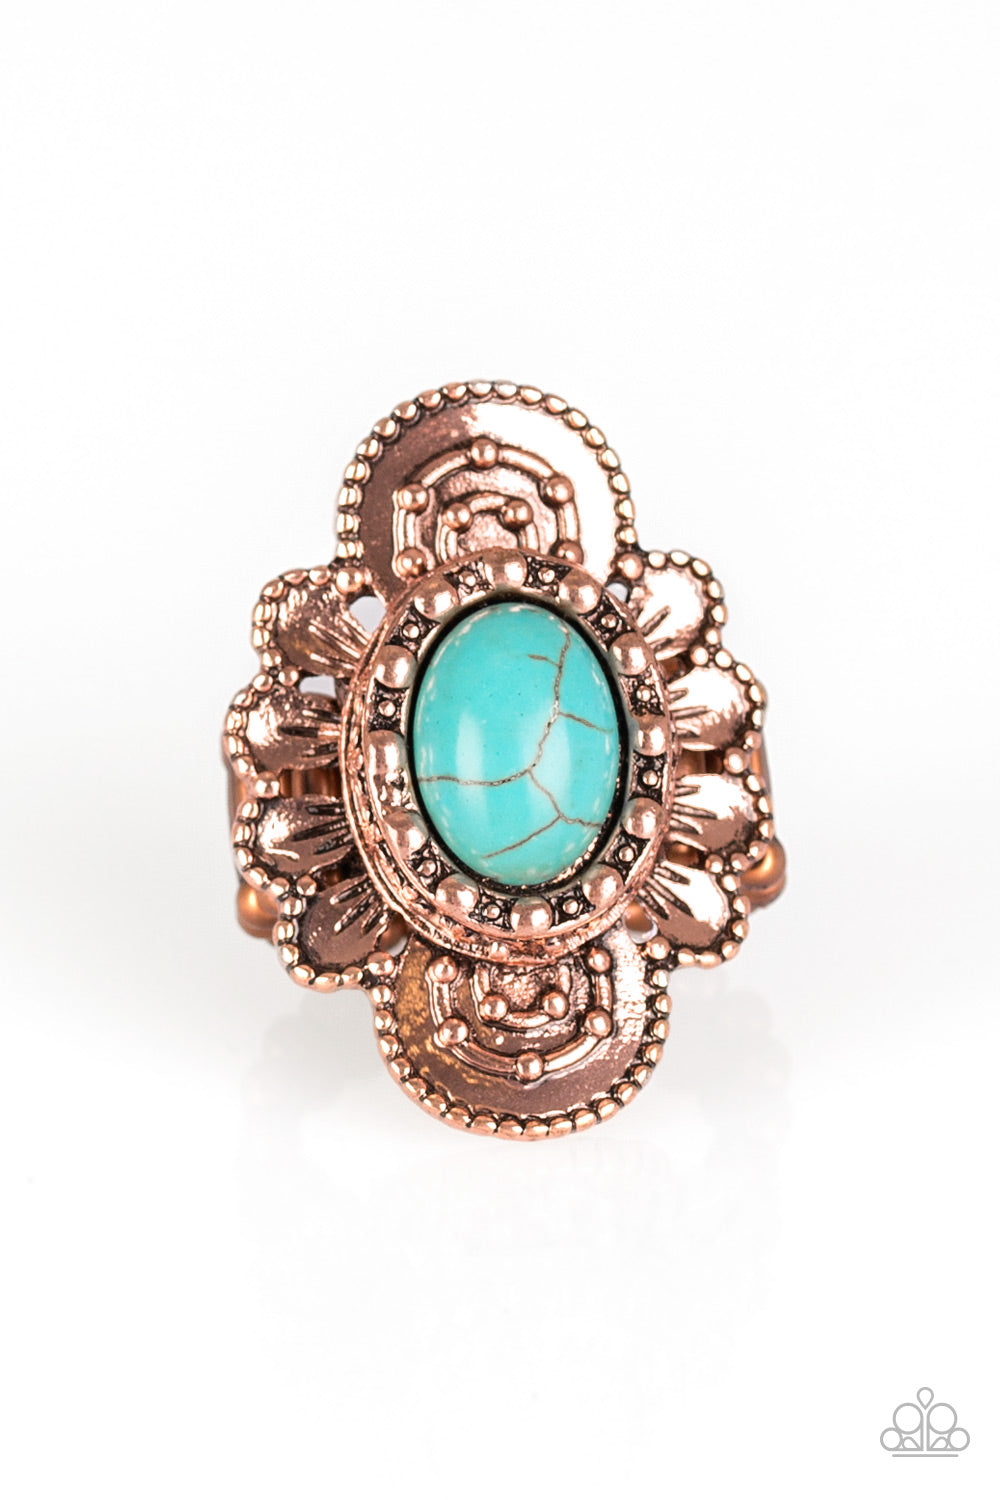 Basic Element Copper Paparazzi Ring Cashmere Pink Jewels - Cashmere Pink Jewels & Accessories, Cashmere Pink Jewels & Accessories - Paparazzi